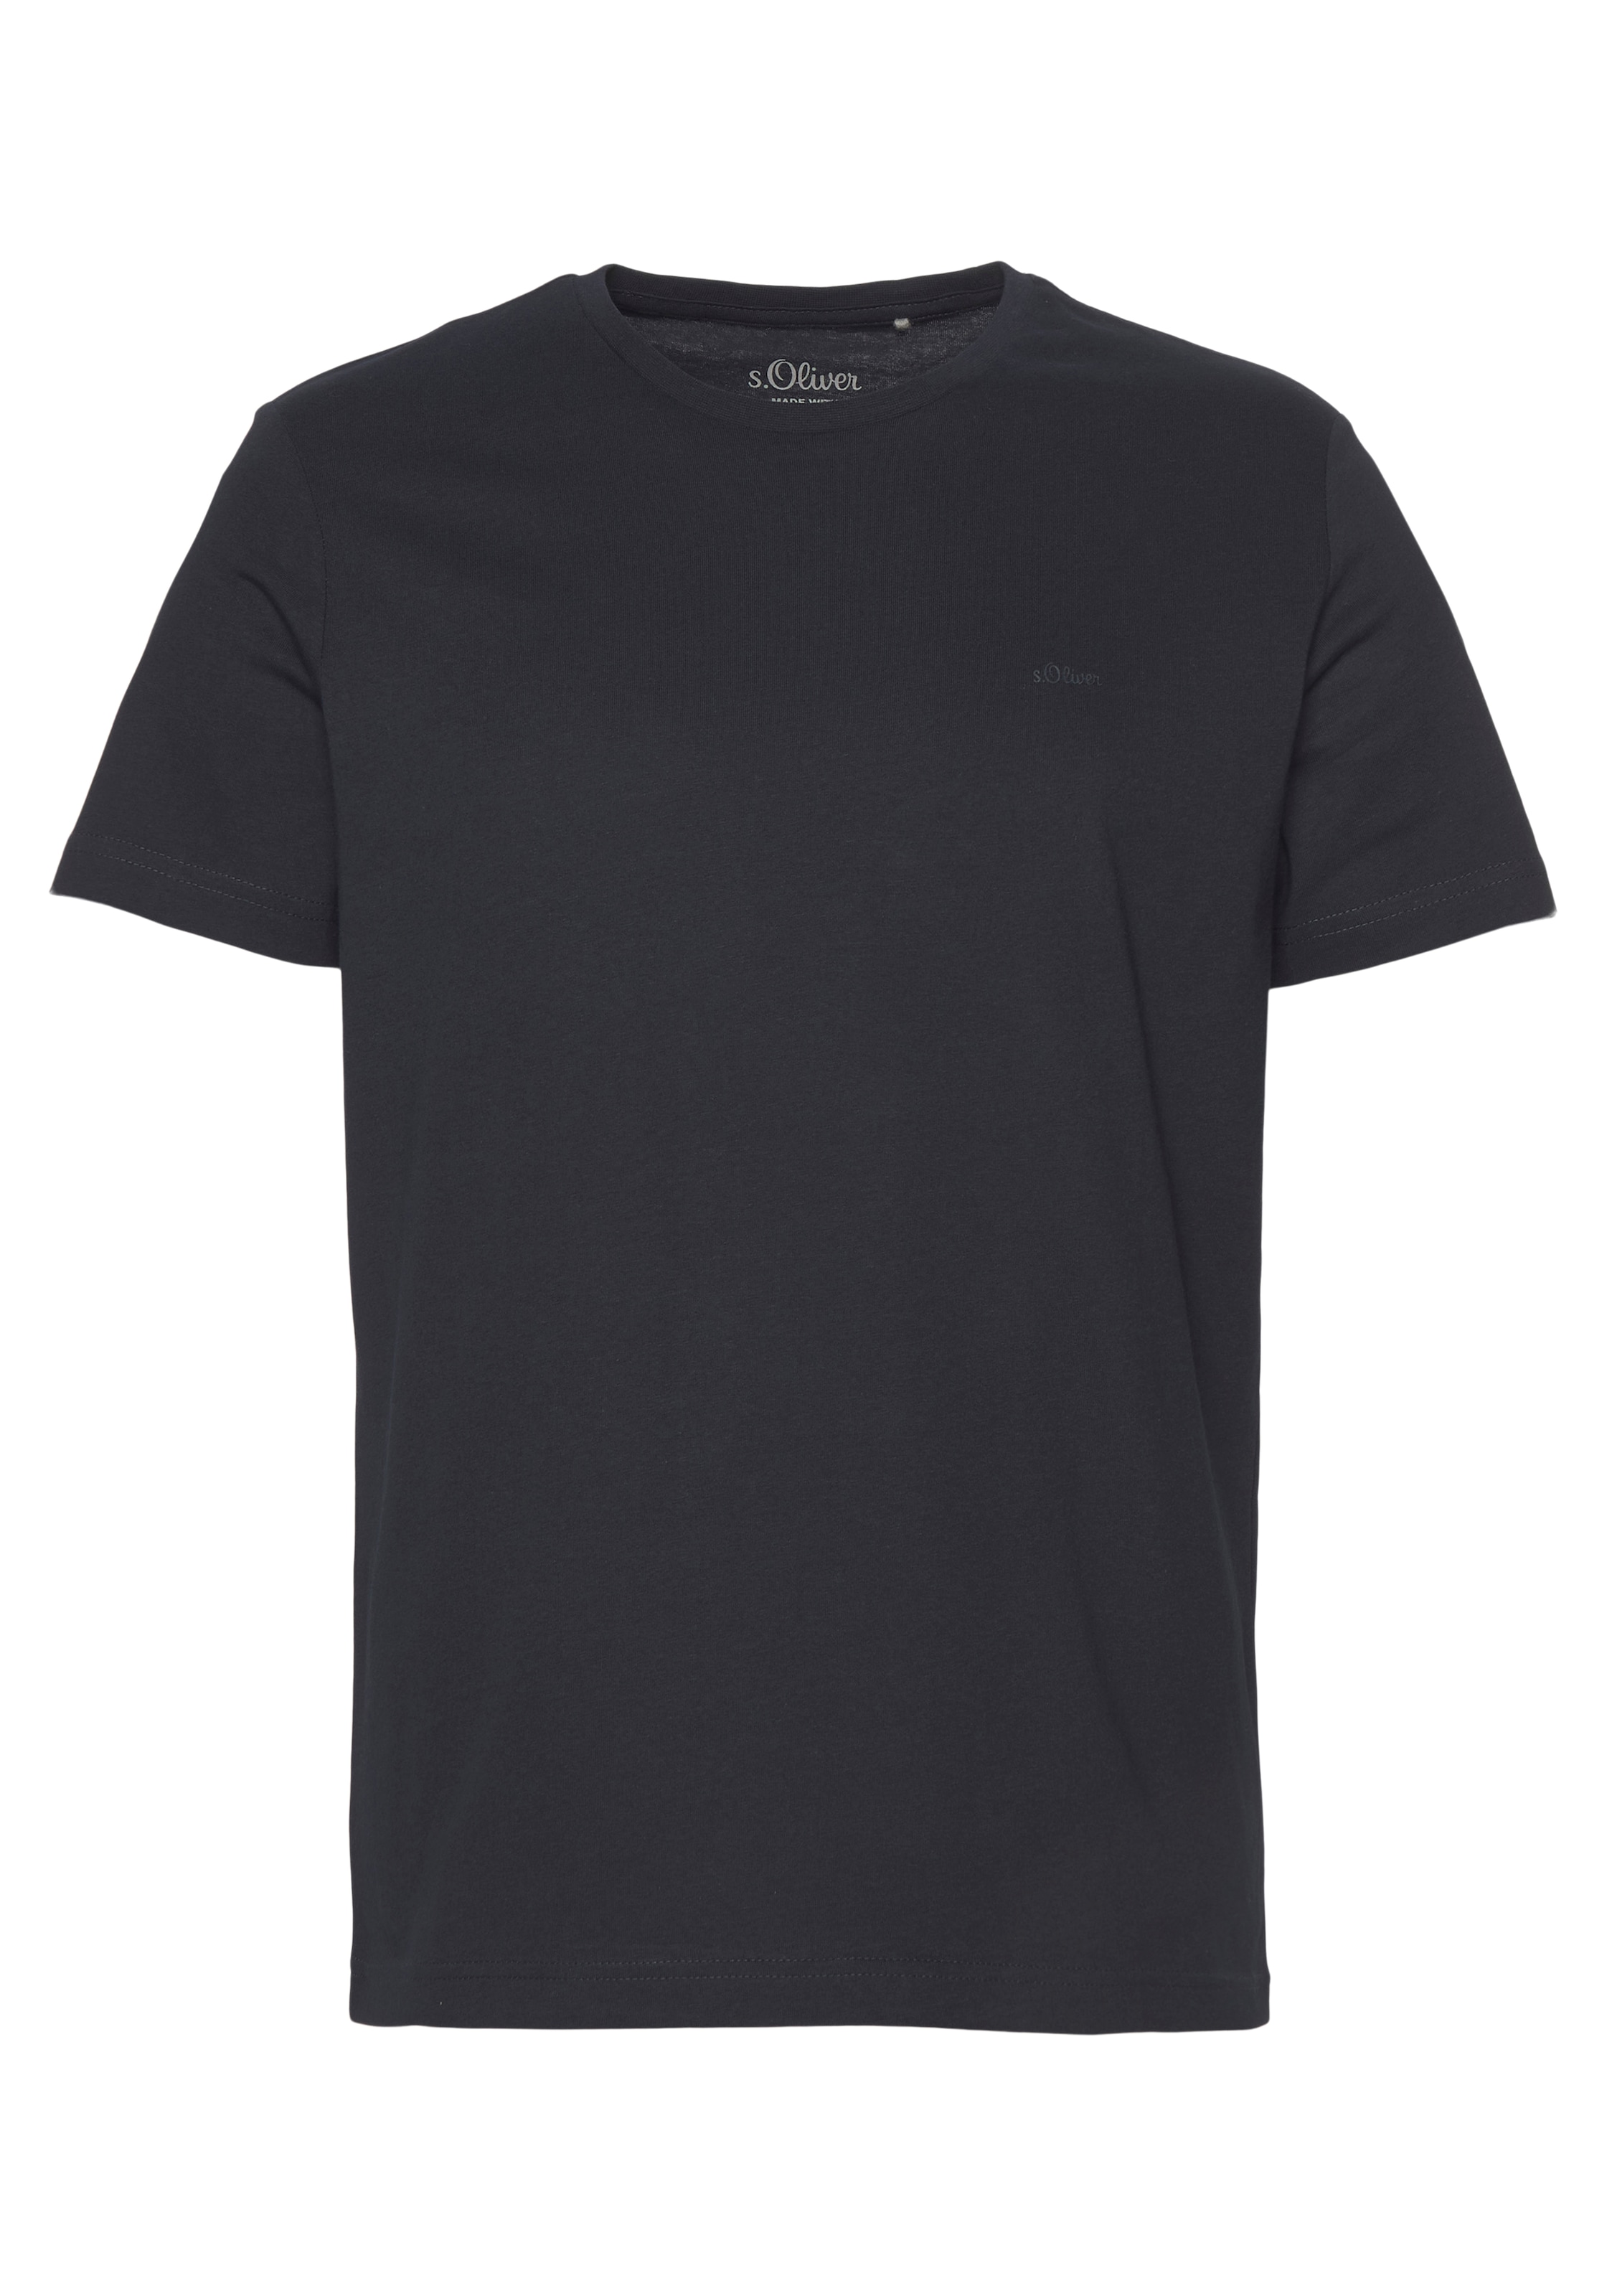 gut T-Shirt, bei kombinierbar OTTO online s.Oliver shoppen